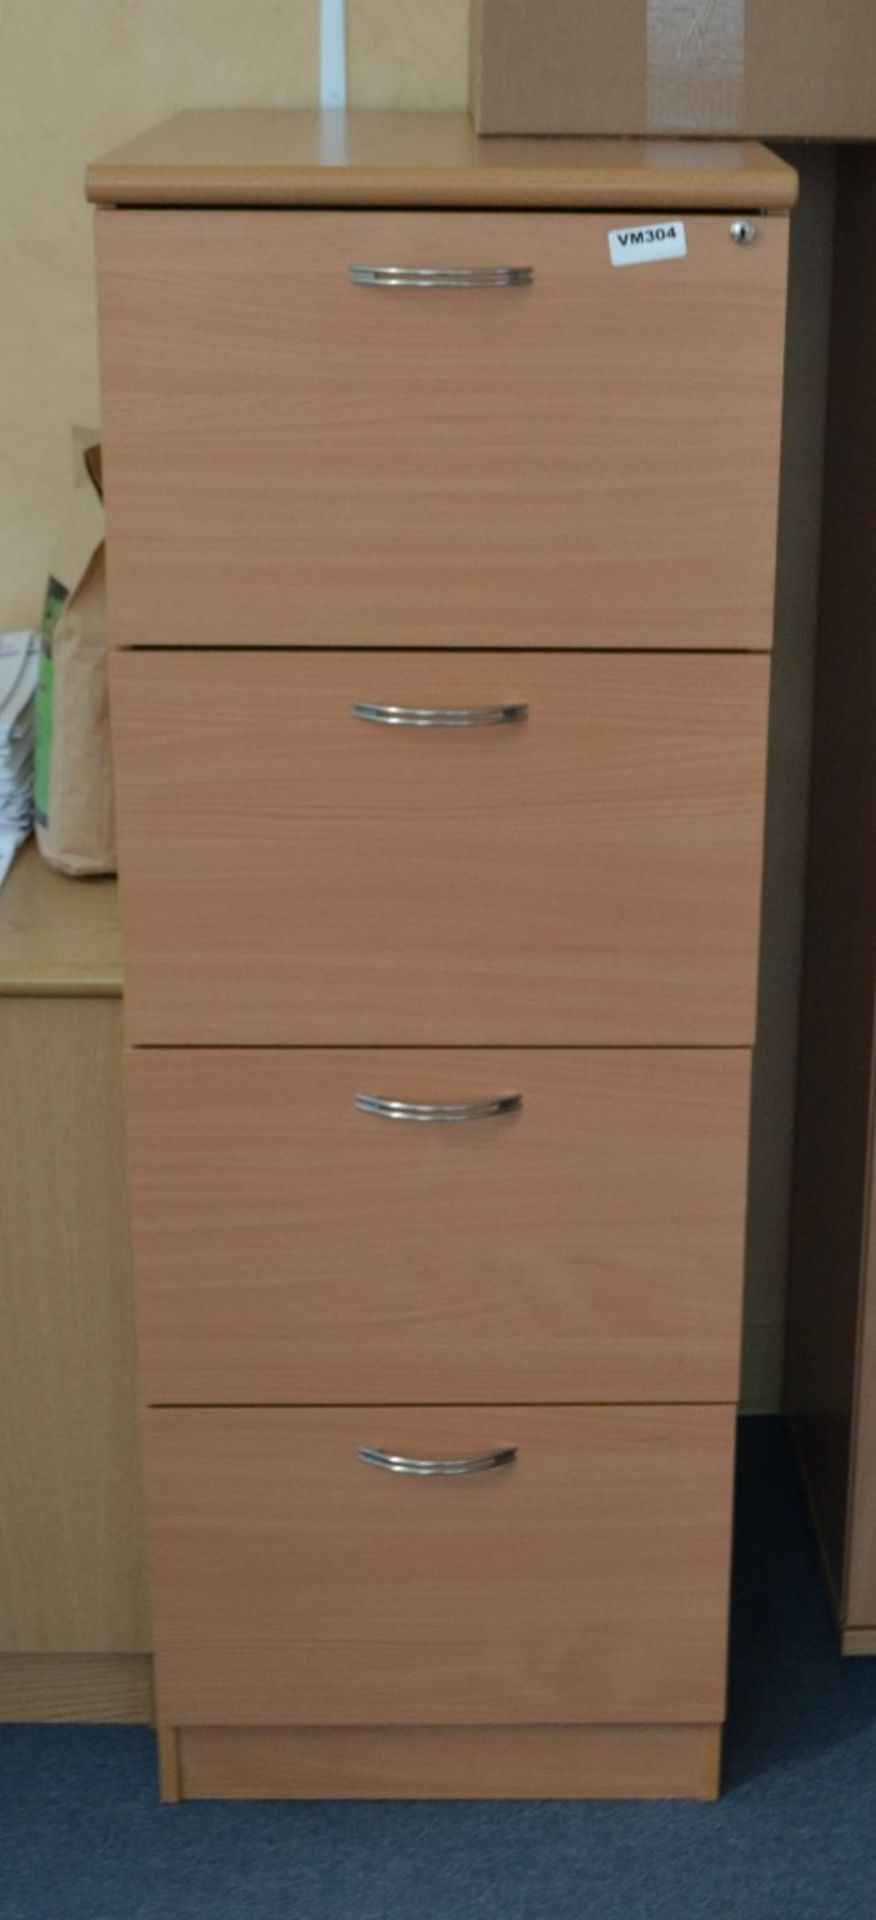 4 x Office Storage Cabinets - Ref: VM303, VM306, VM304 - CL409 - Location: Wakefield - Image 4 of 4